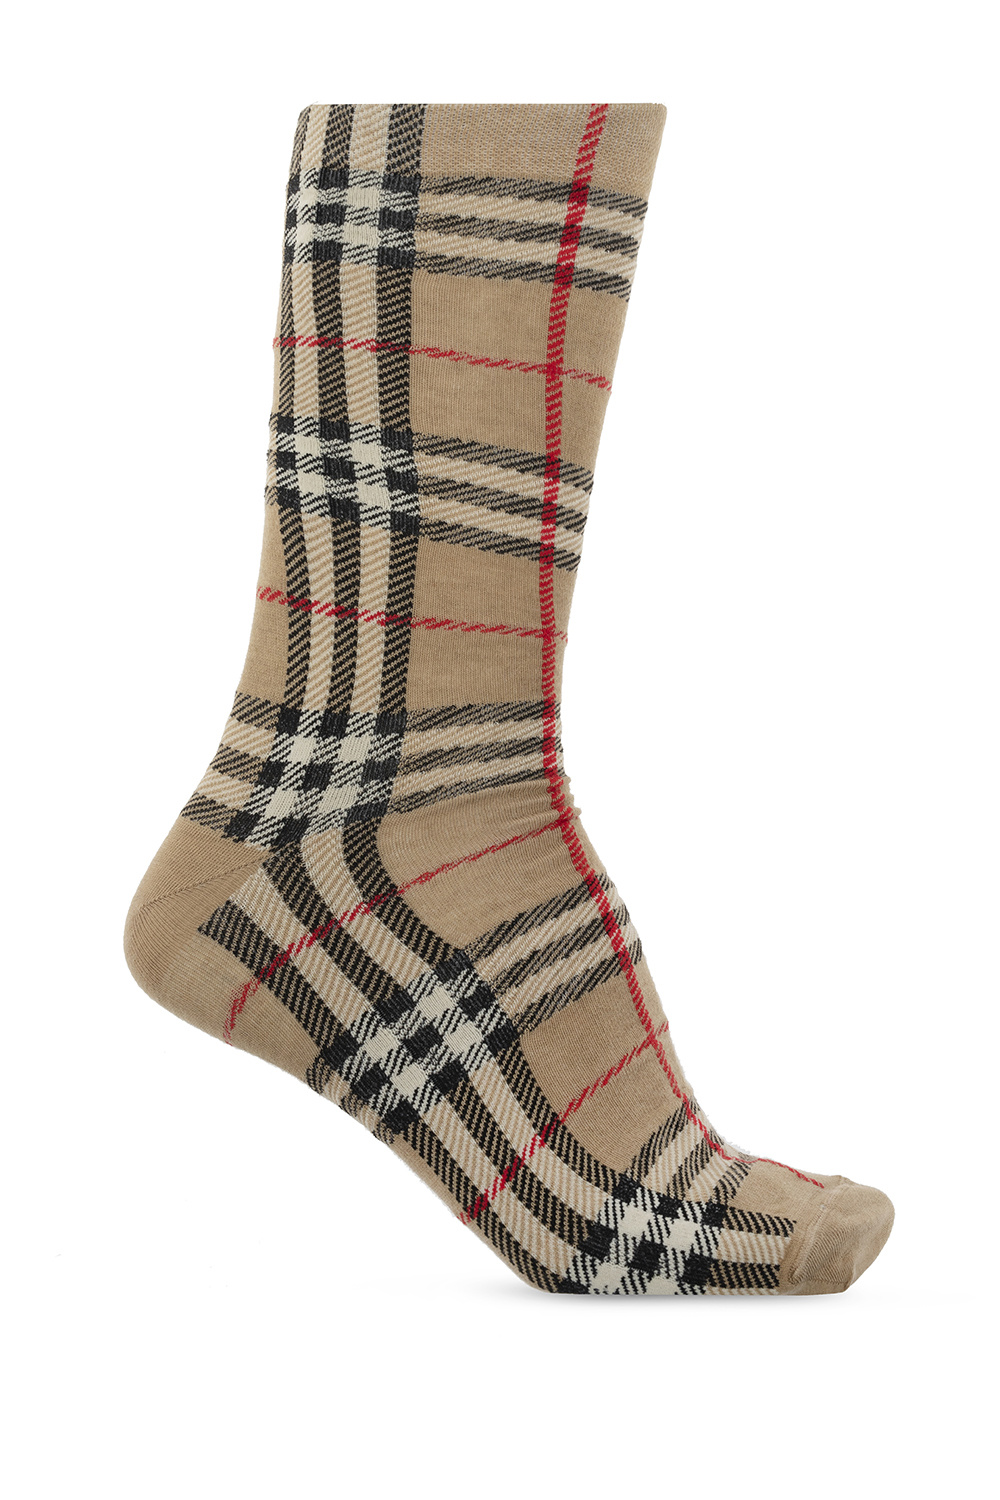 Burberry Socks with ‘Vintage’ check